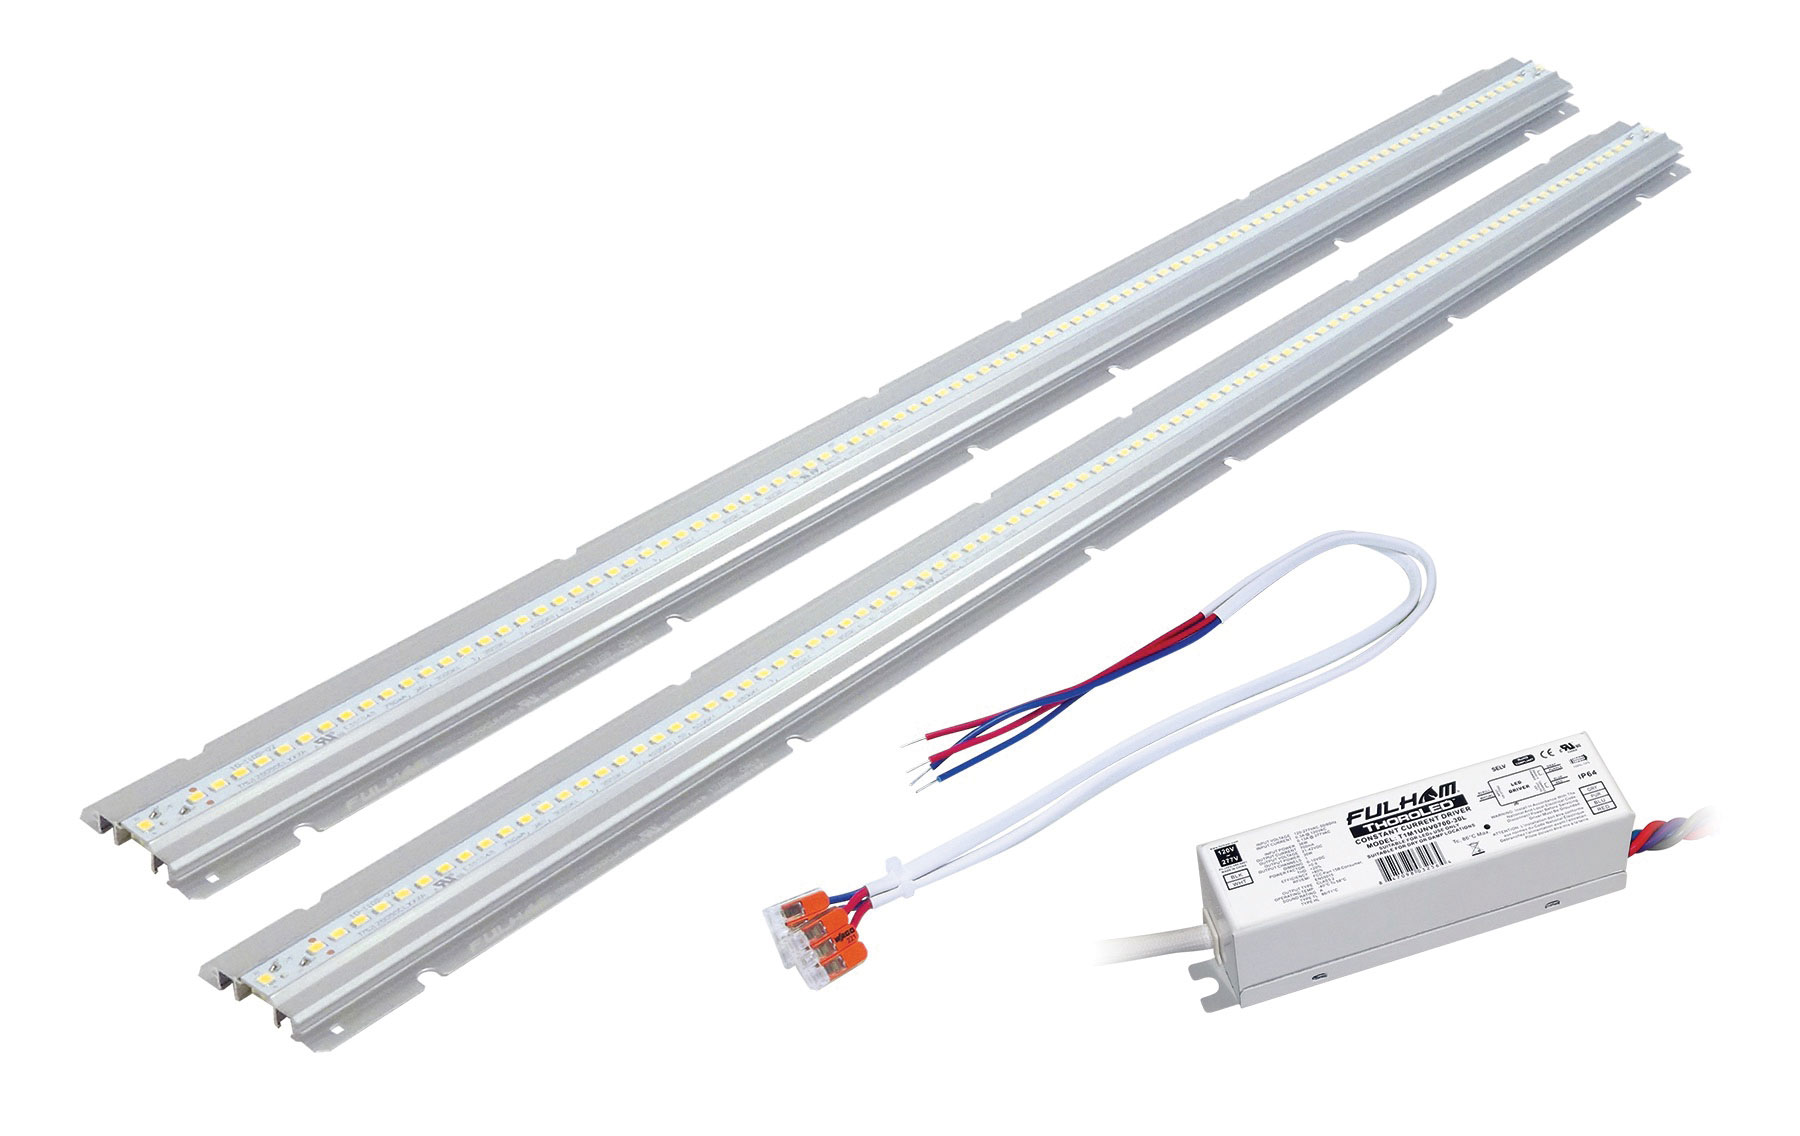 Fulham's LinearHO Universal Voltage LED Retrofit Kit